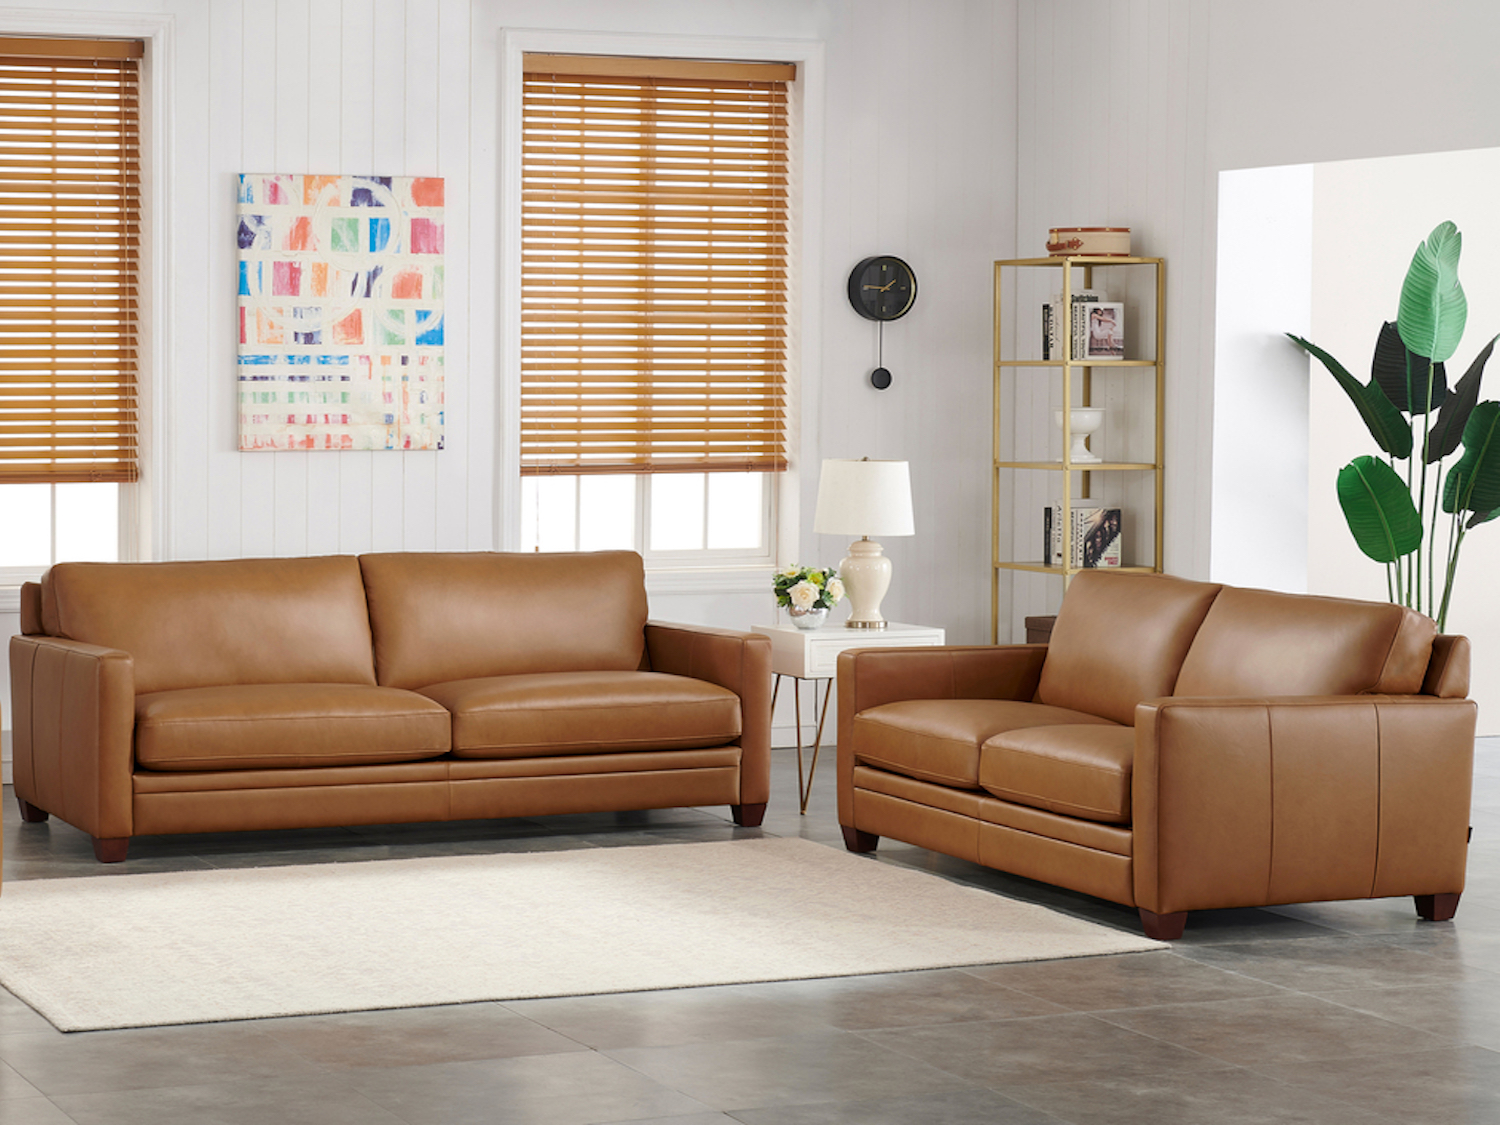 amax leather sofa costco